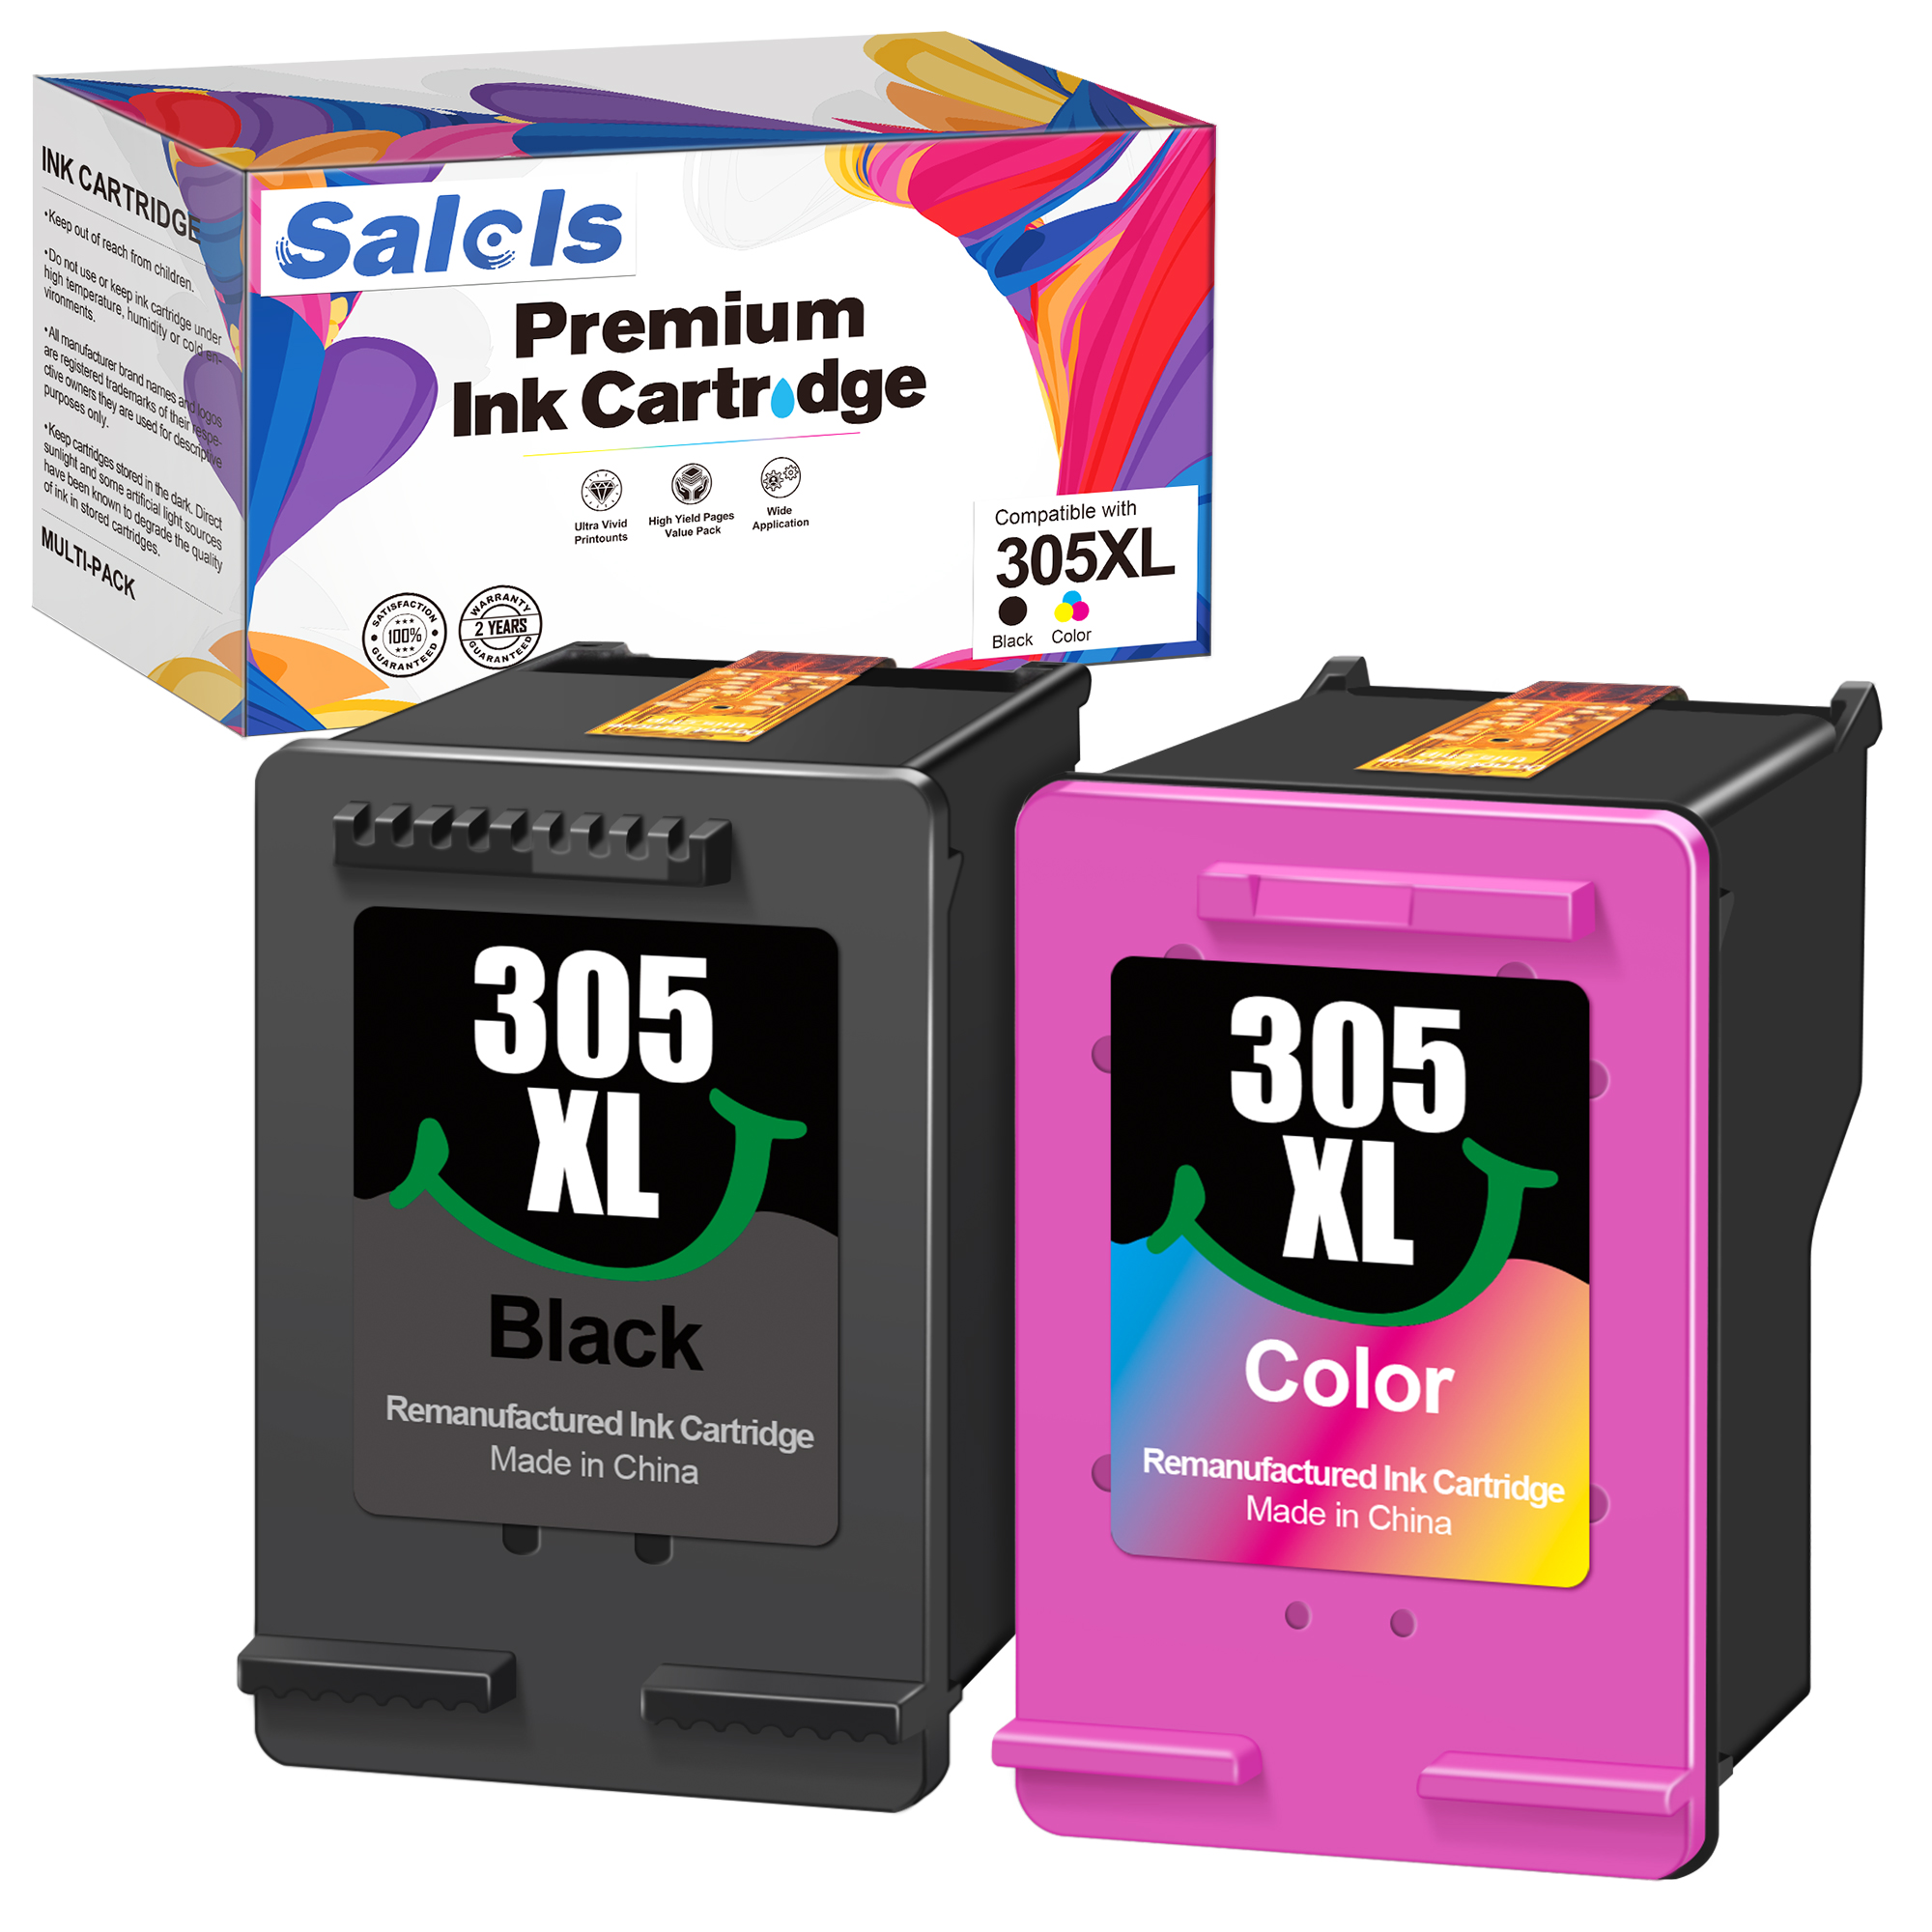 Salols 305XL Ink Cartridges (1 Black, 1 Color)